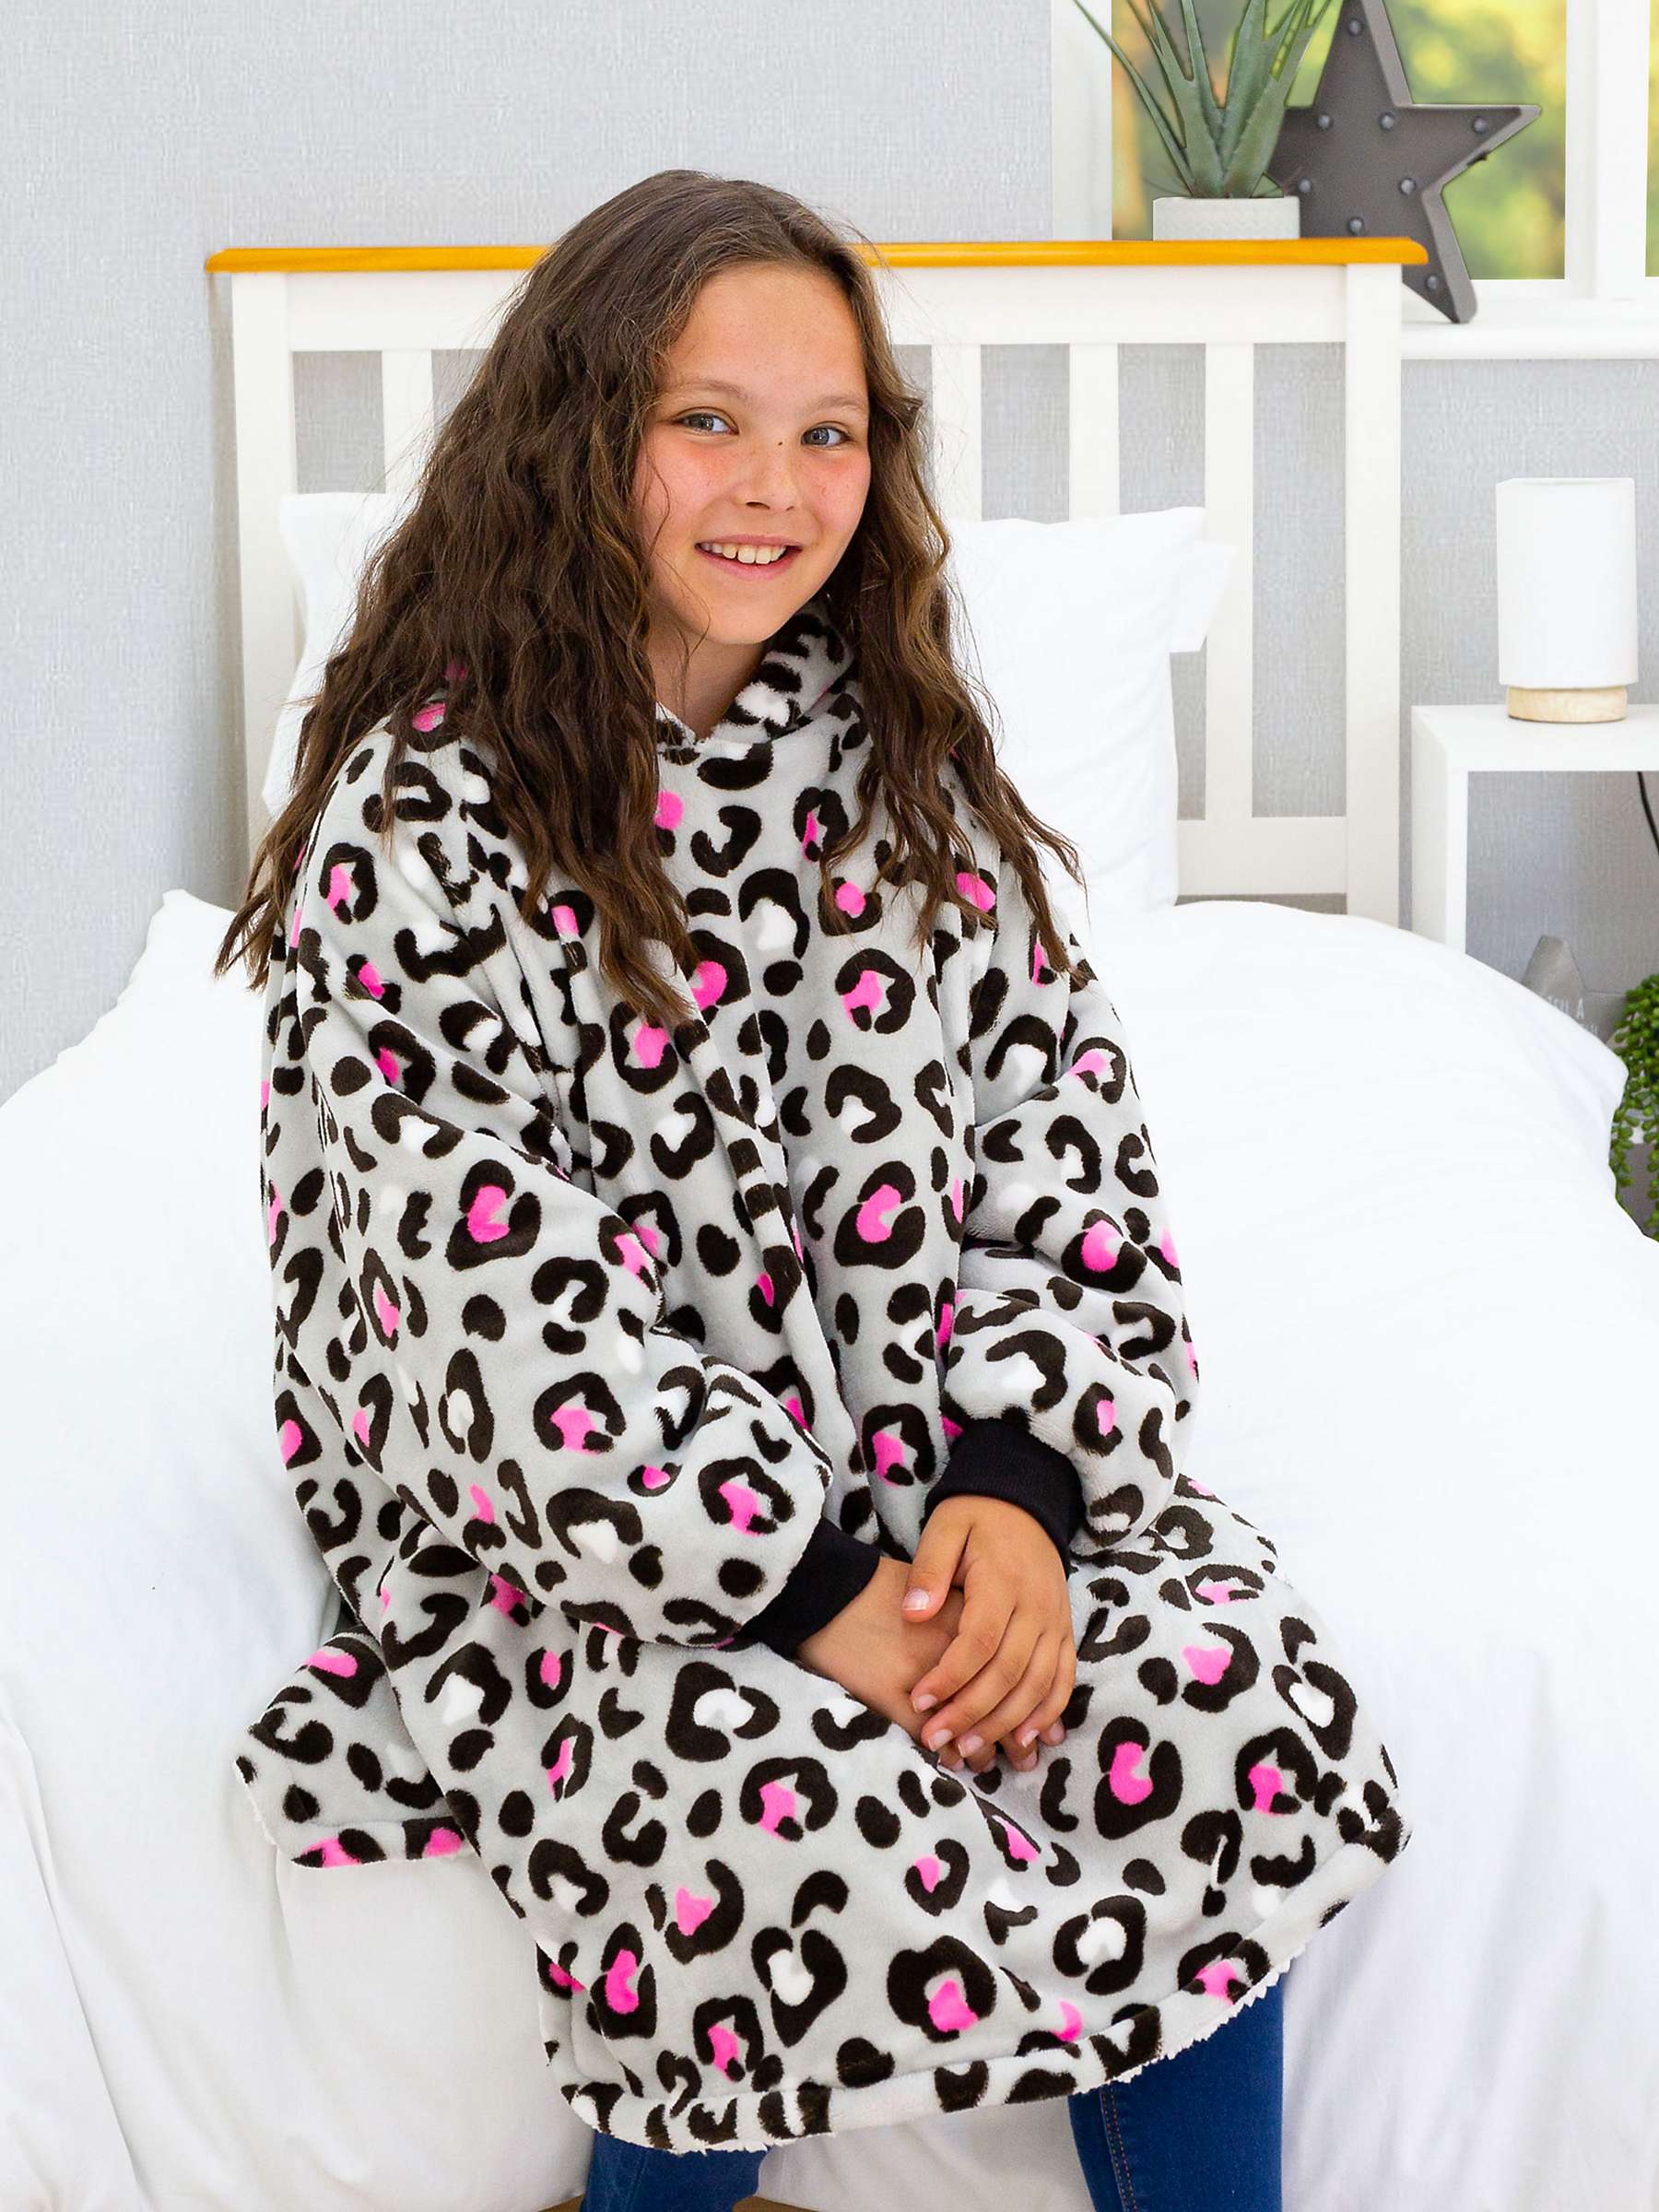 Rest Easy Sleep Better Hugzee Oversized Fleece Hooded Blanket, Leopard Print  at John Lewis & Partners